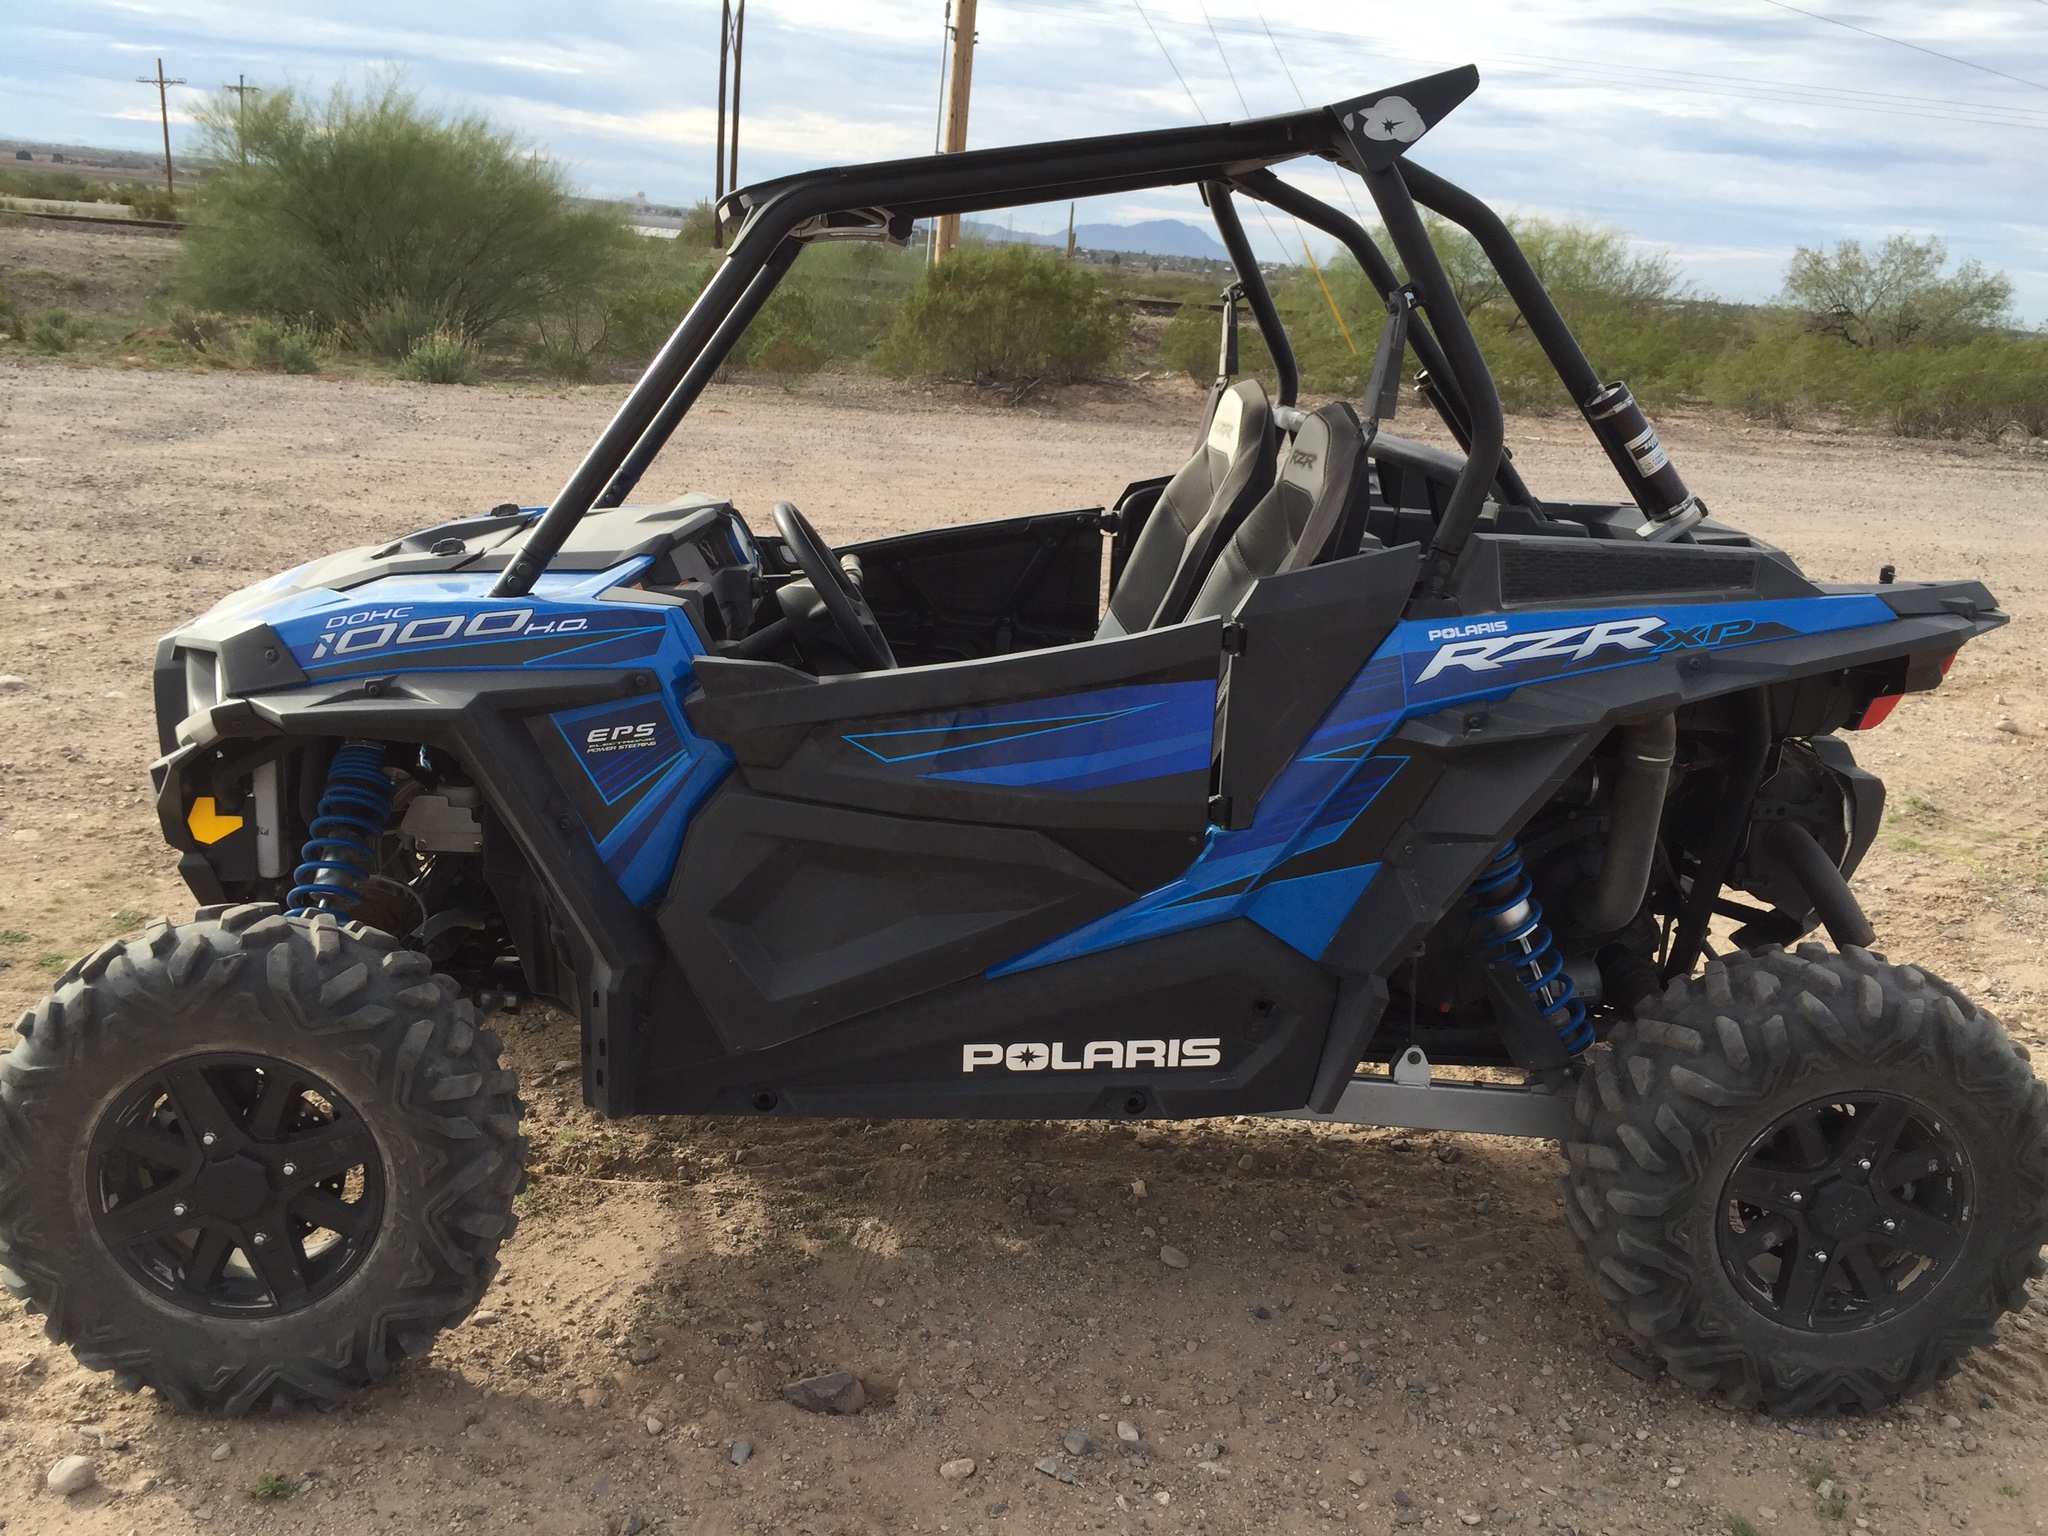 RZR XP rental Phoenix | Onsite ATV Rentals Phoenix Arizona - Call 480-331-ROAD (7623)